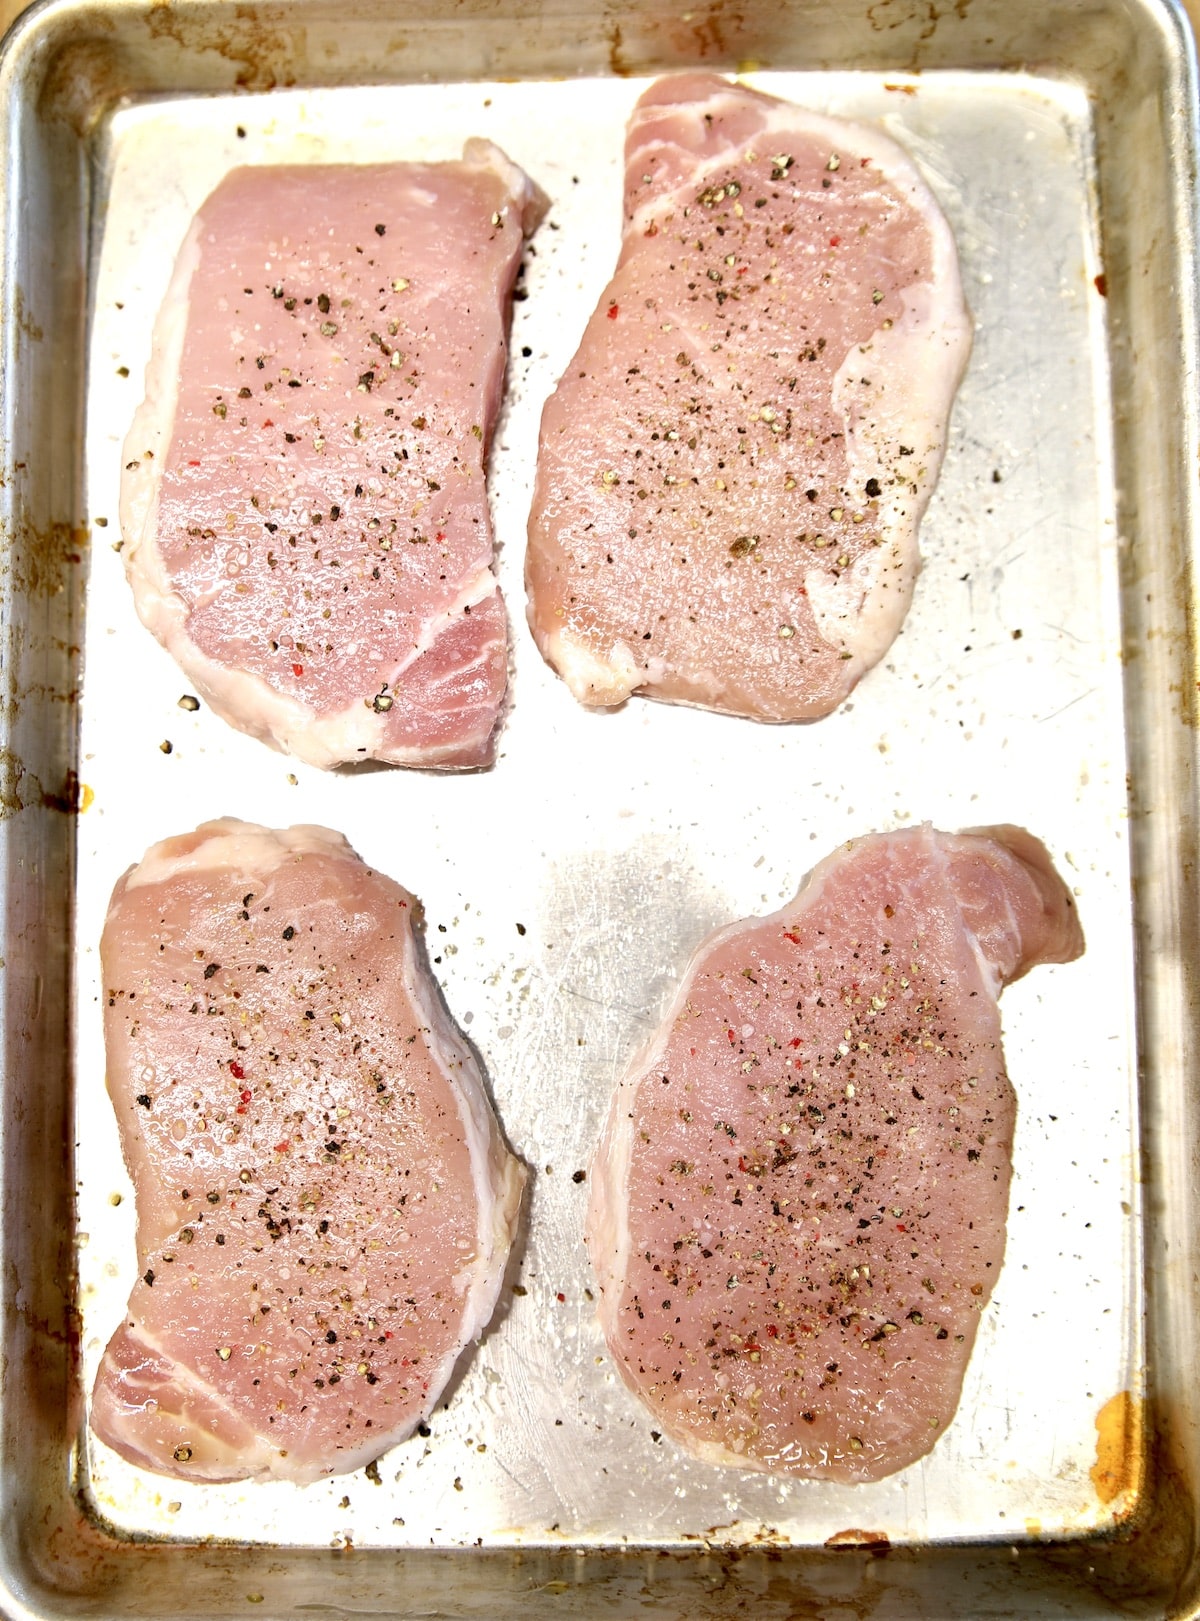 4 raw pork chops on a baking sheet, seasoned.